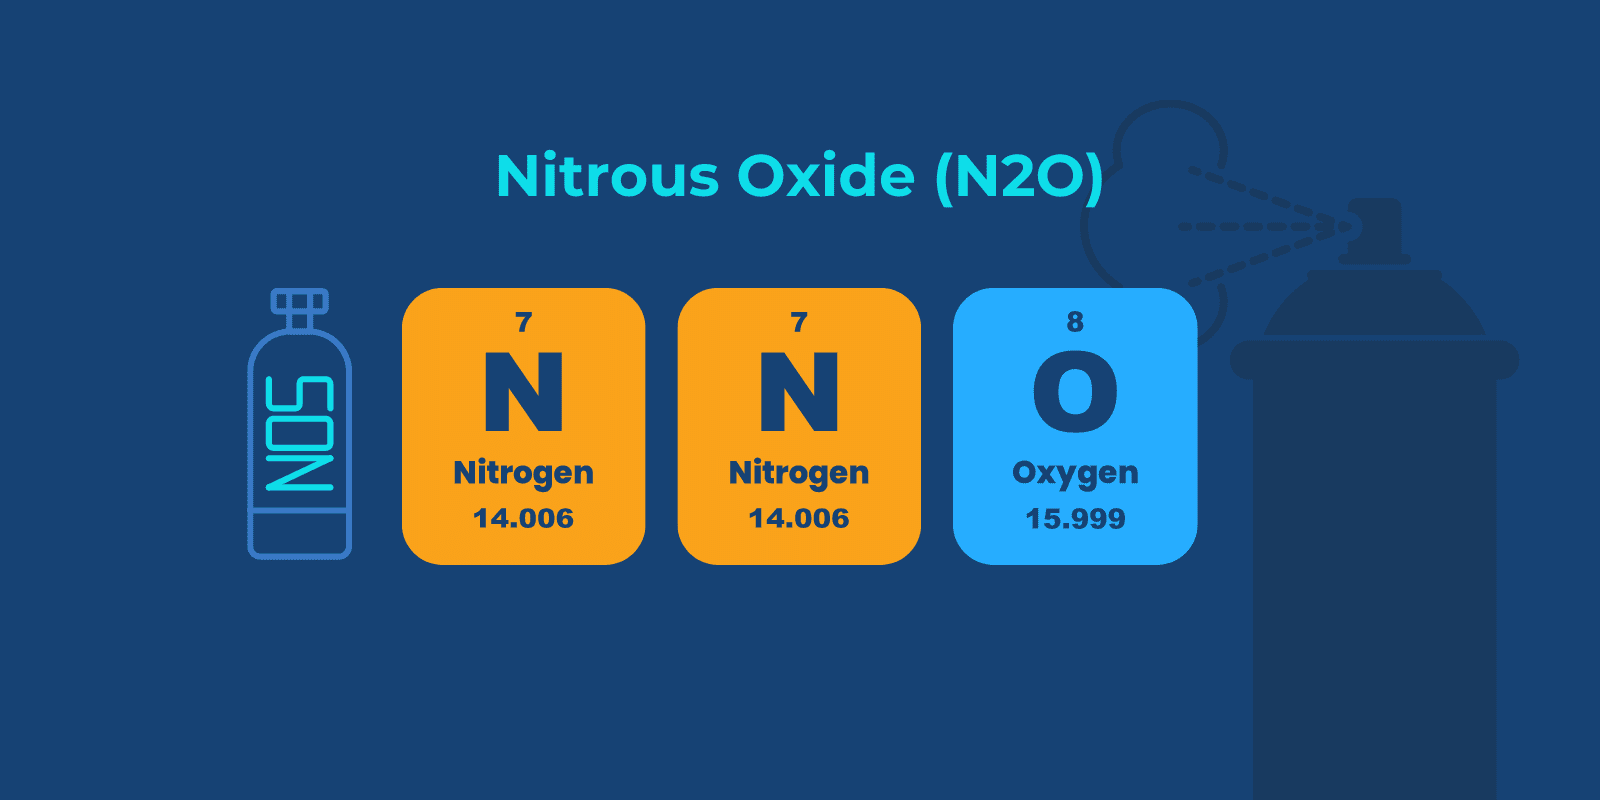 Nitrous Oxide Compound illustration (N2O)